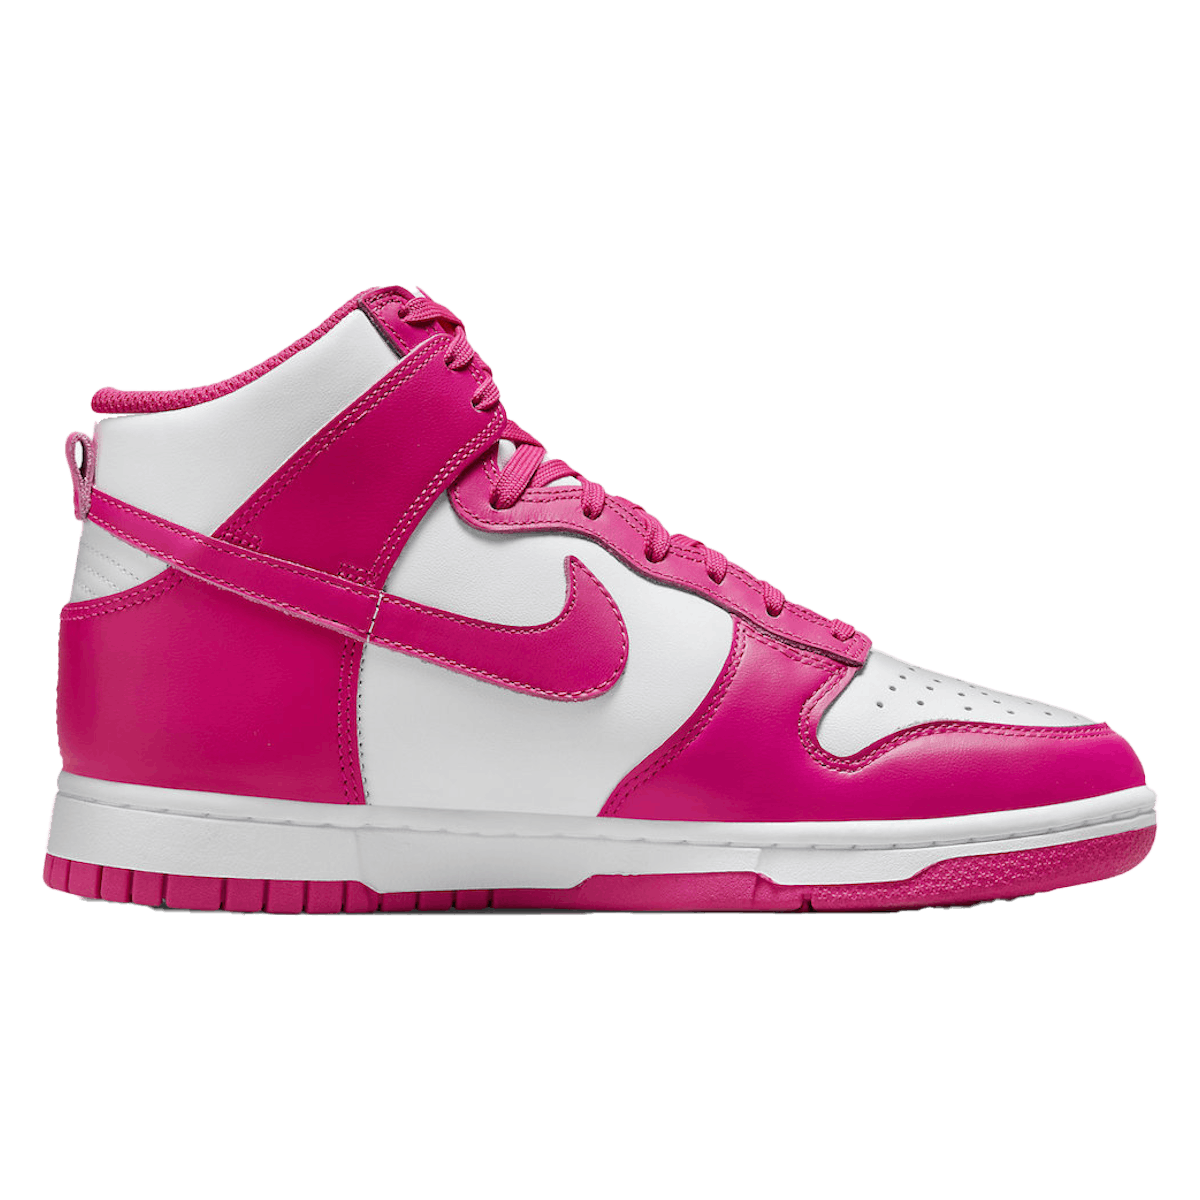 Nike Dunk High WMNS "Pink Prime"